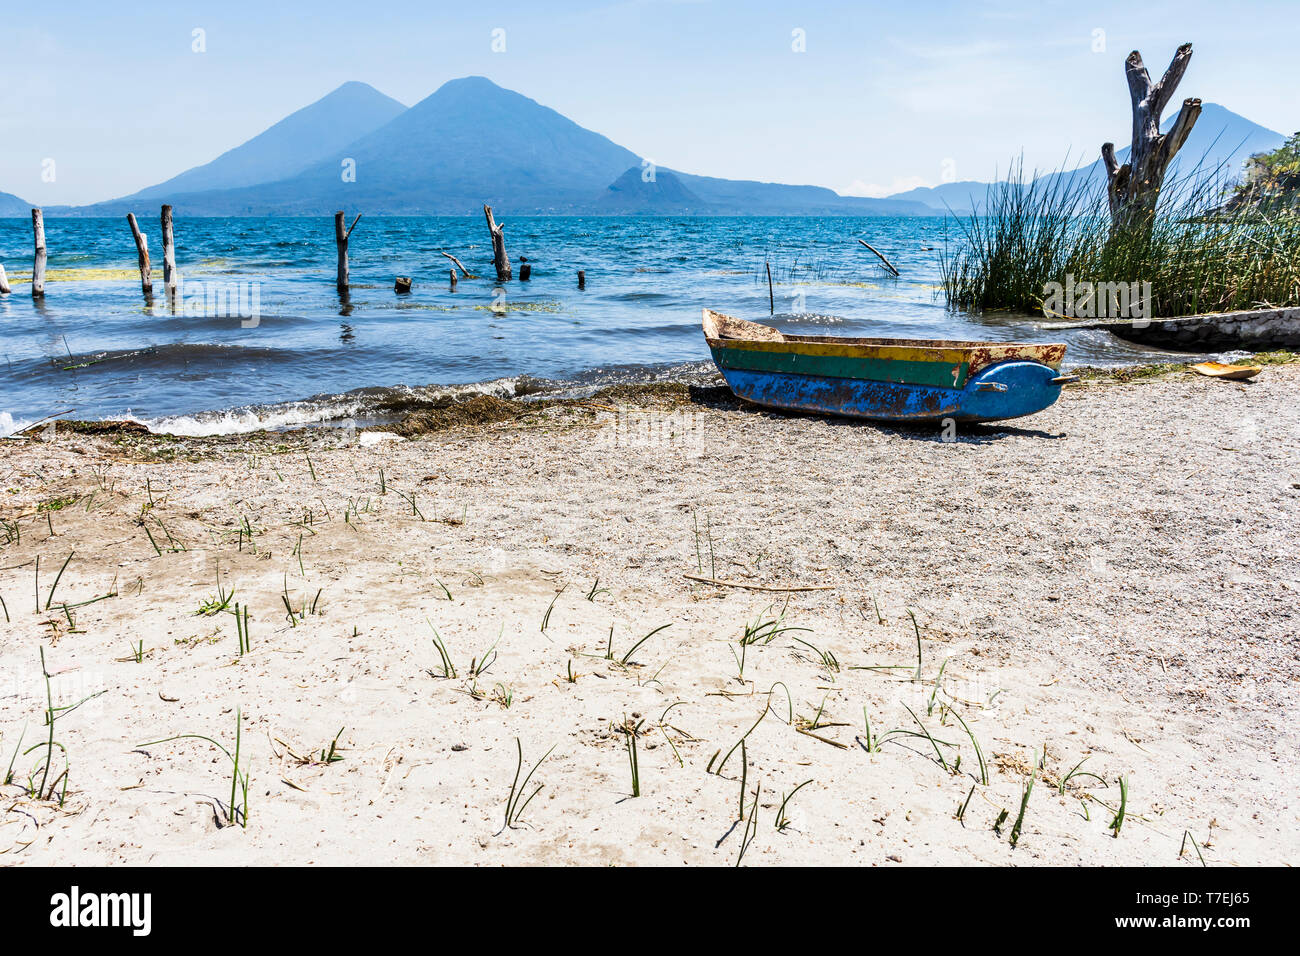 Traditionelle Holz- Boot am Strand mit Toliman & Atitlan Vulkane am Horizont am Atitlan See, Guatemala. Stockfoto